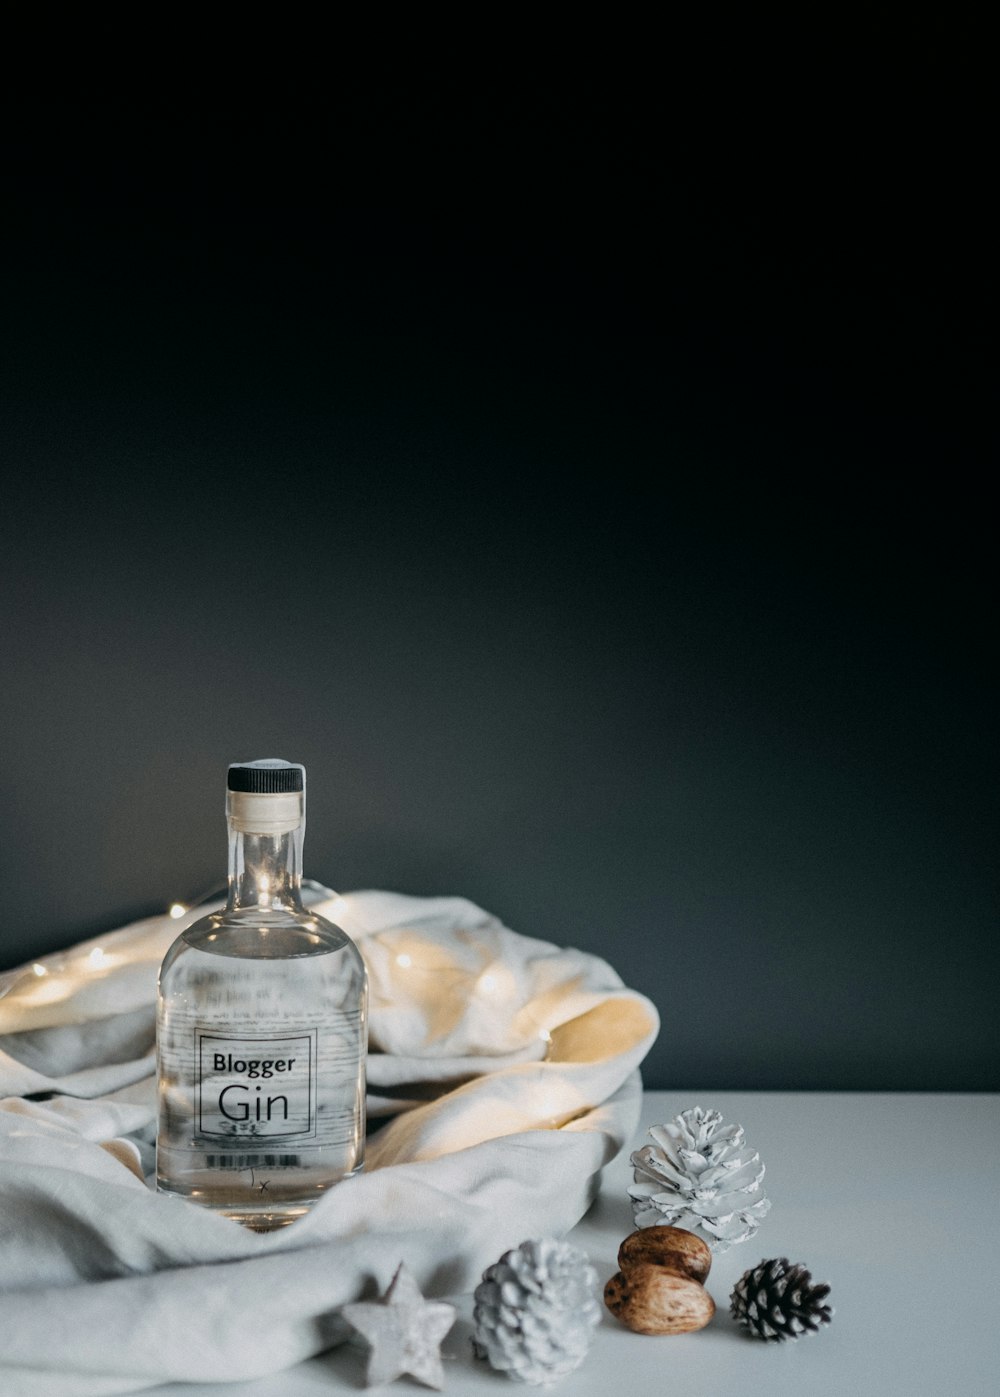 Blogger Gin glass bottle on white wooden surface